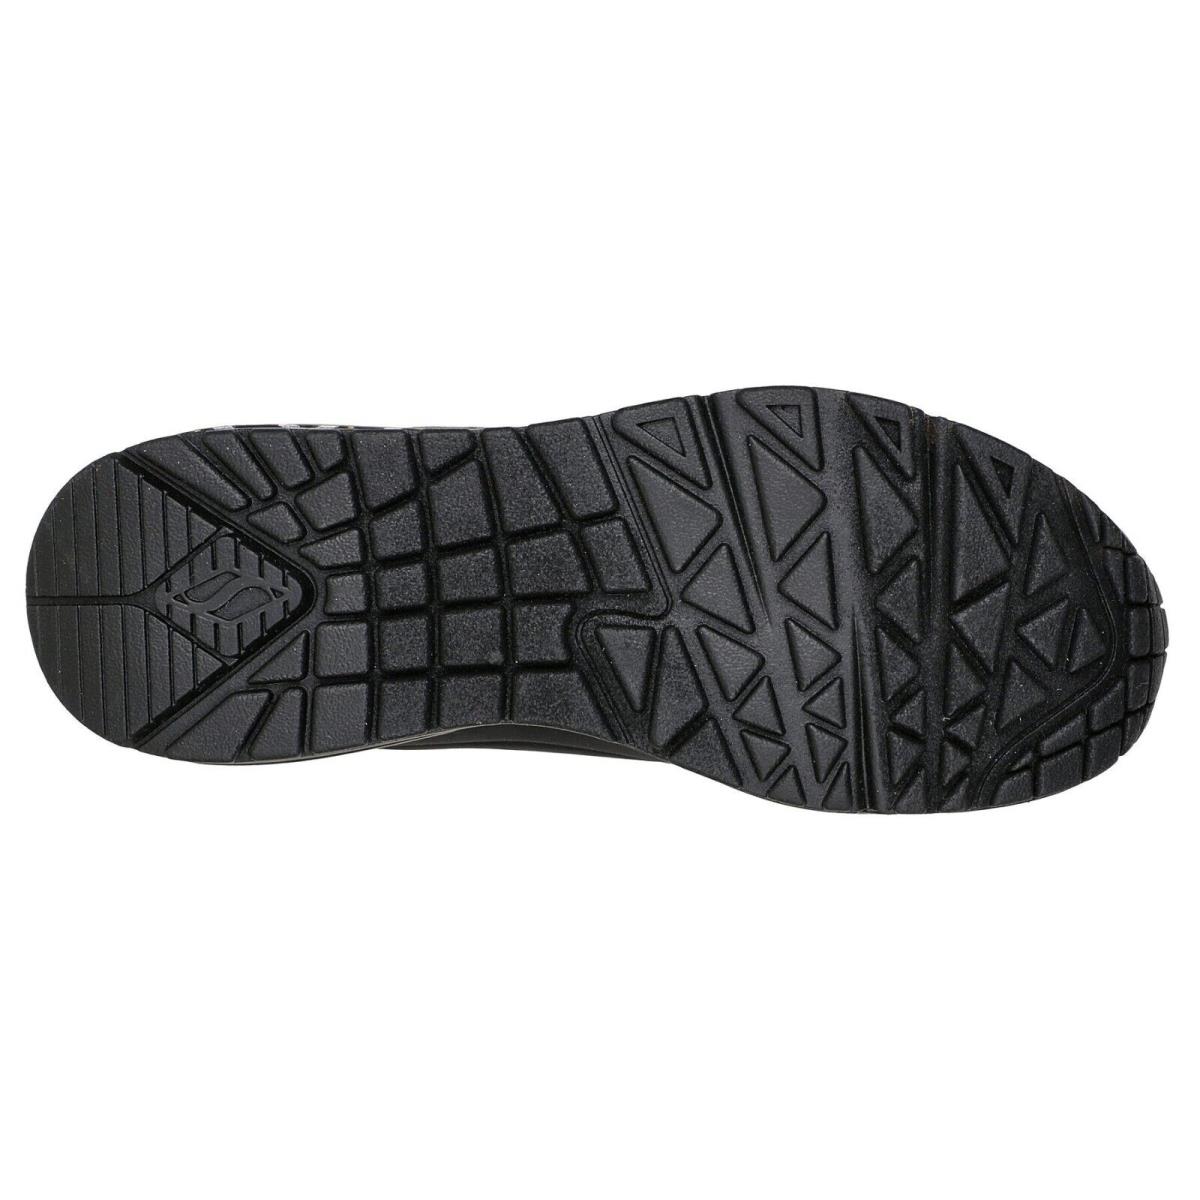 Skechers shoes Uno Metallic Love - Black/Gold 14